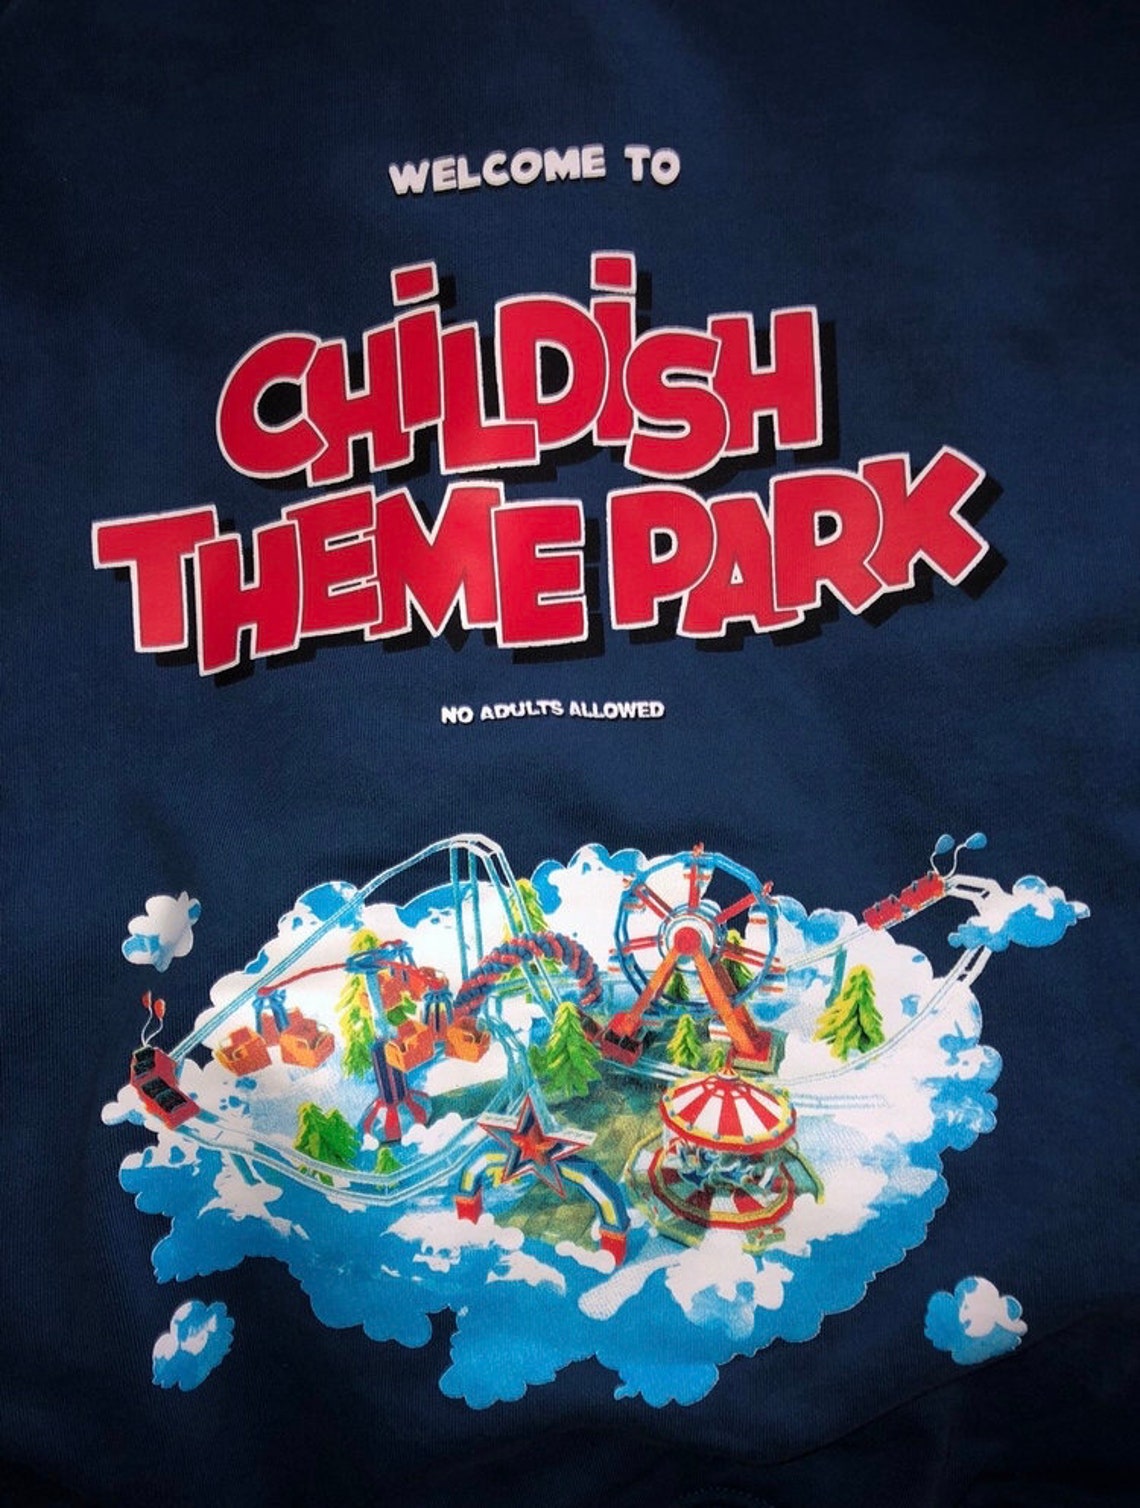 TGF Childish theme park hoodie | Etsy